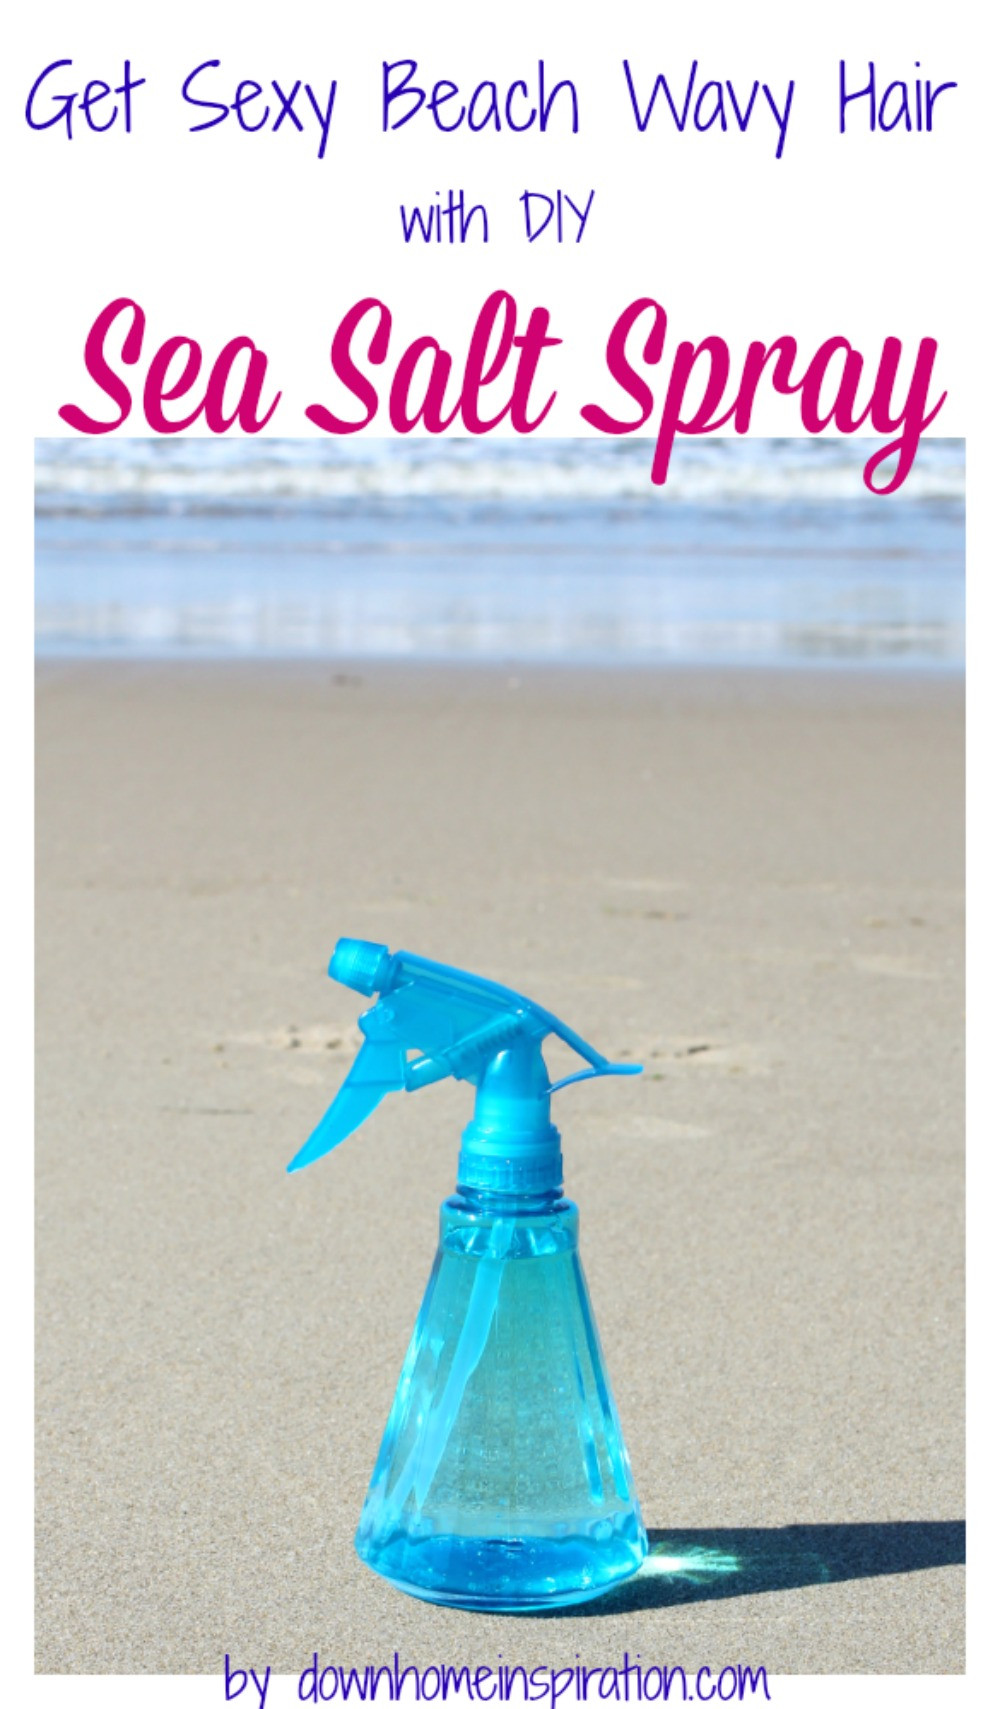 Best ideas about Sea Salt Spray DIY
. Save or Pin Get y Beach Wavy Hair with DIY Sea Salt Spray Down Now.